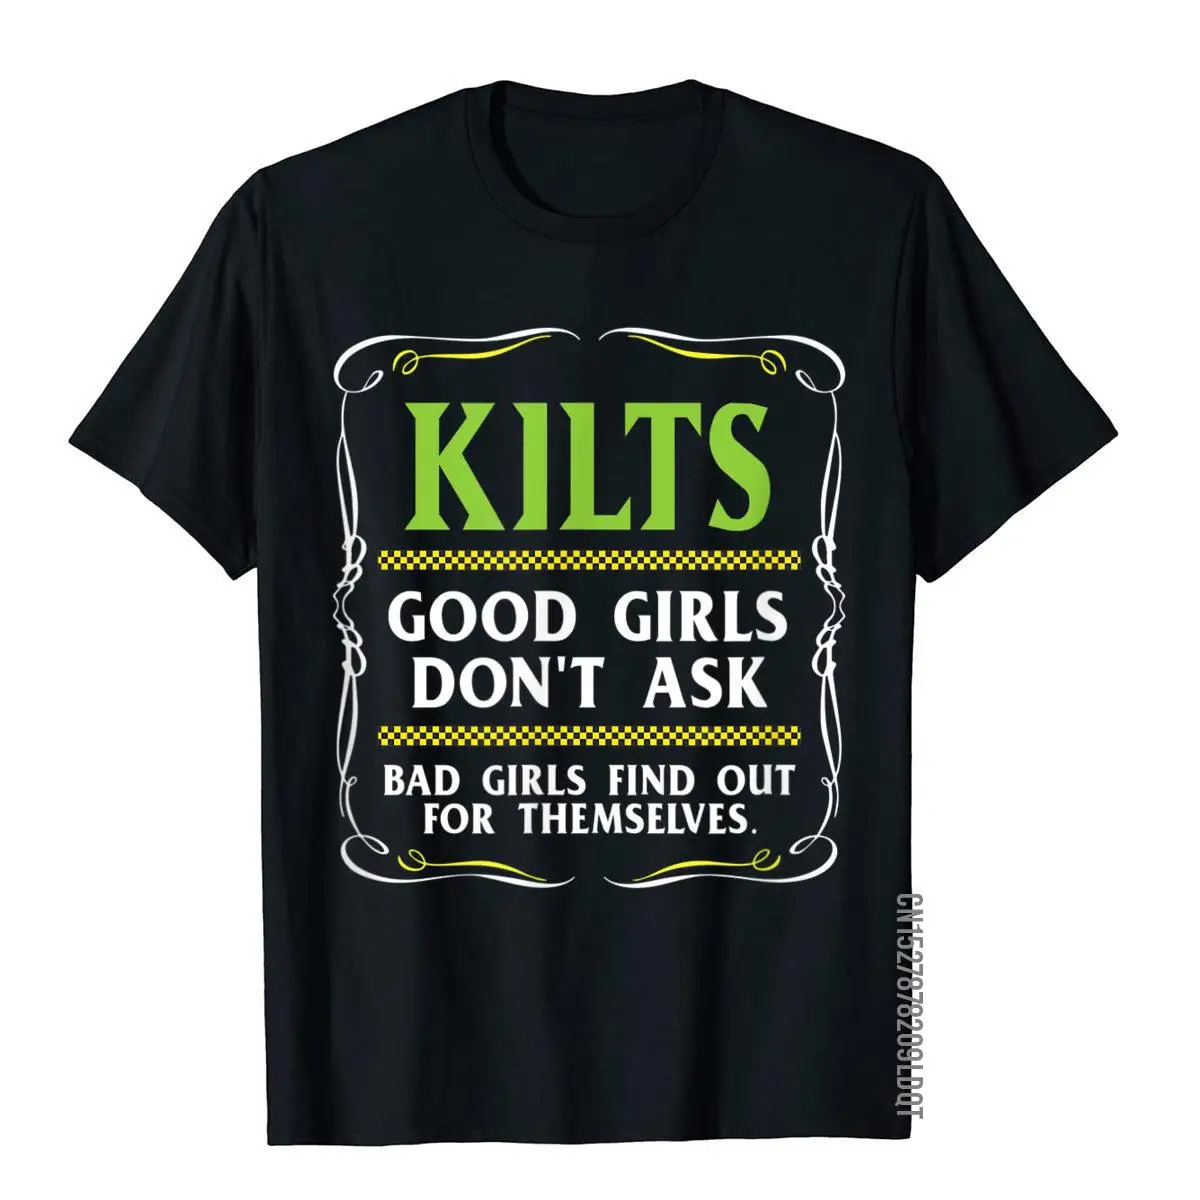 Kilts Good Girls Don't Ask T-shirt Funny Scottish Tee__B11576black